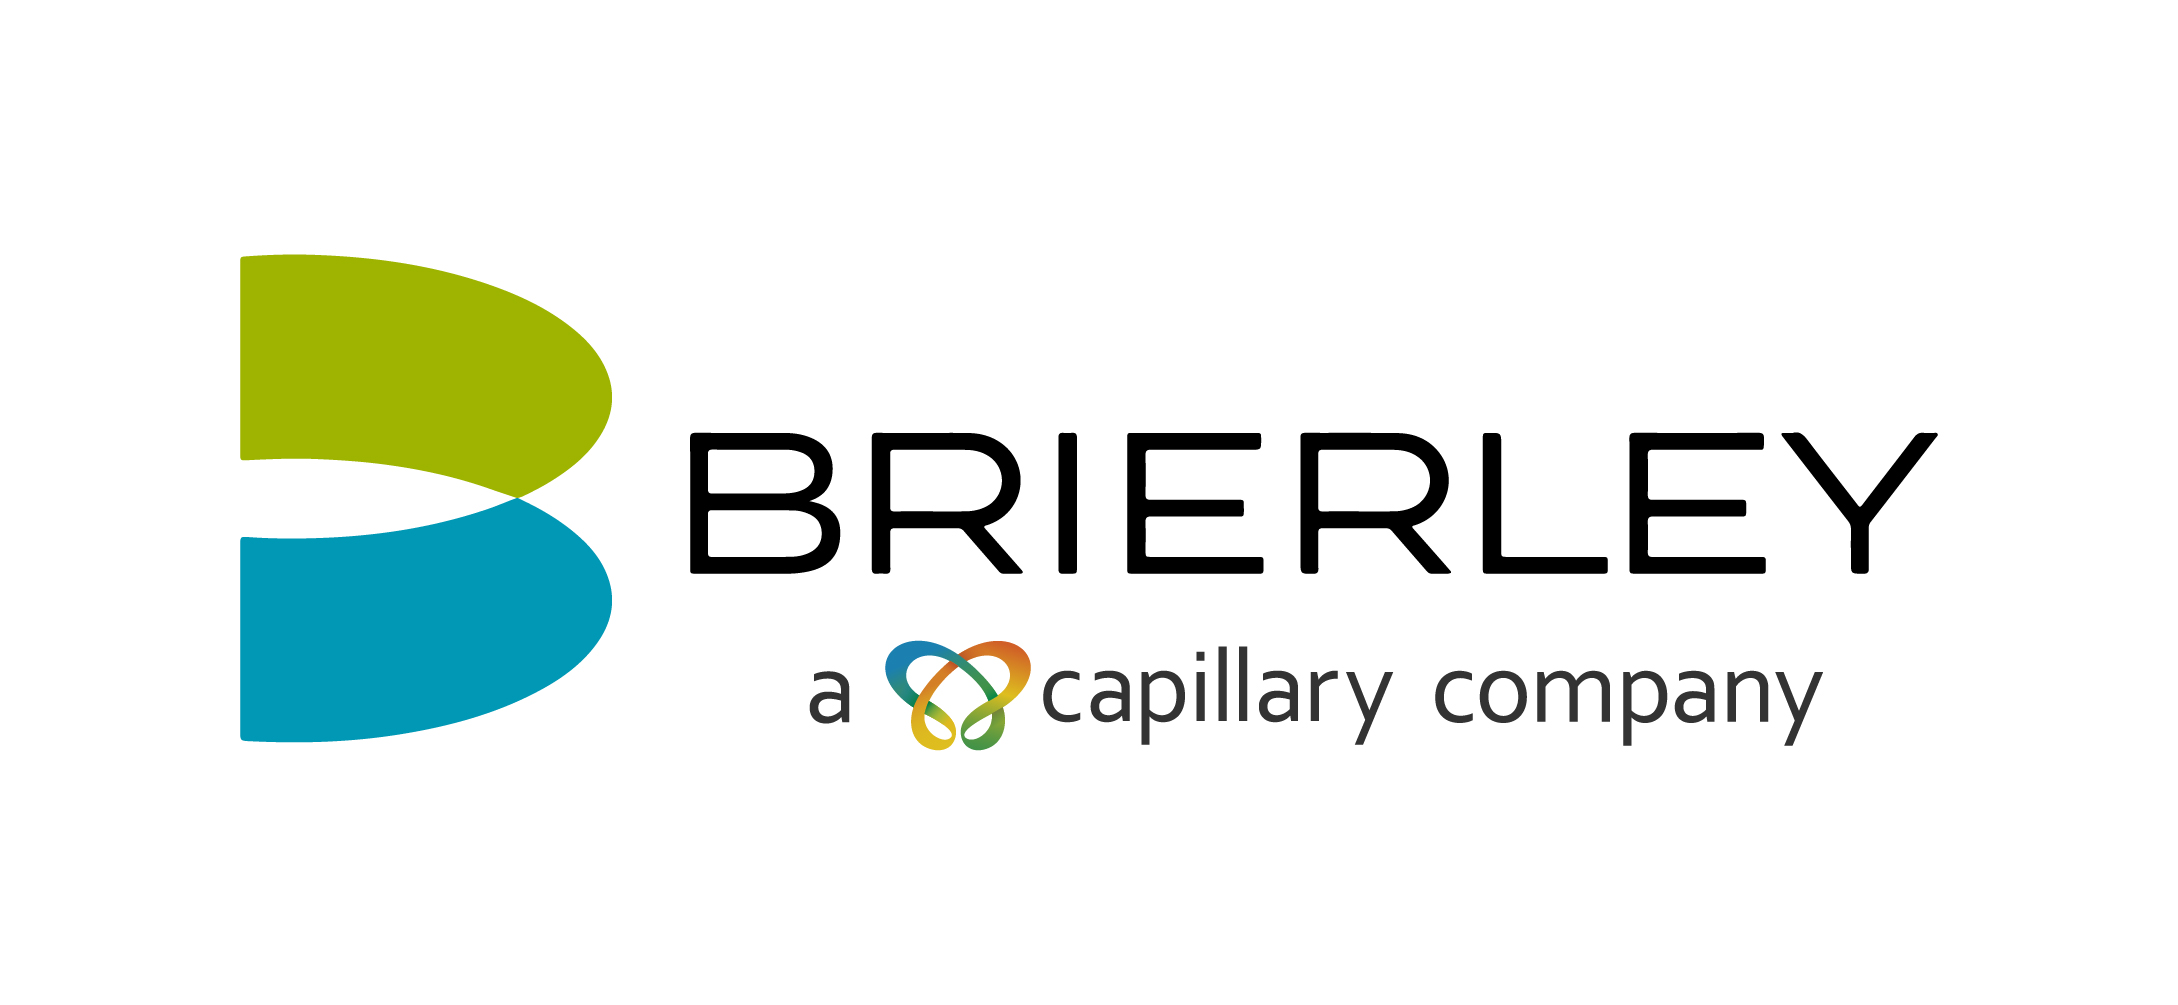 New Brierley Identity